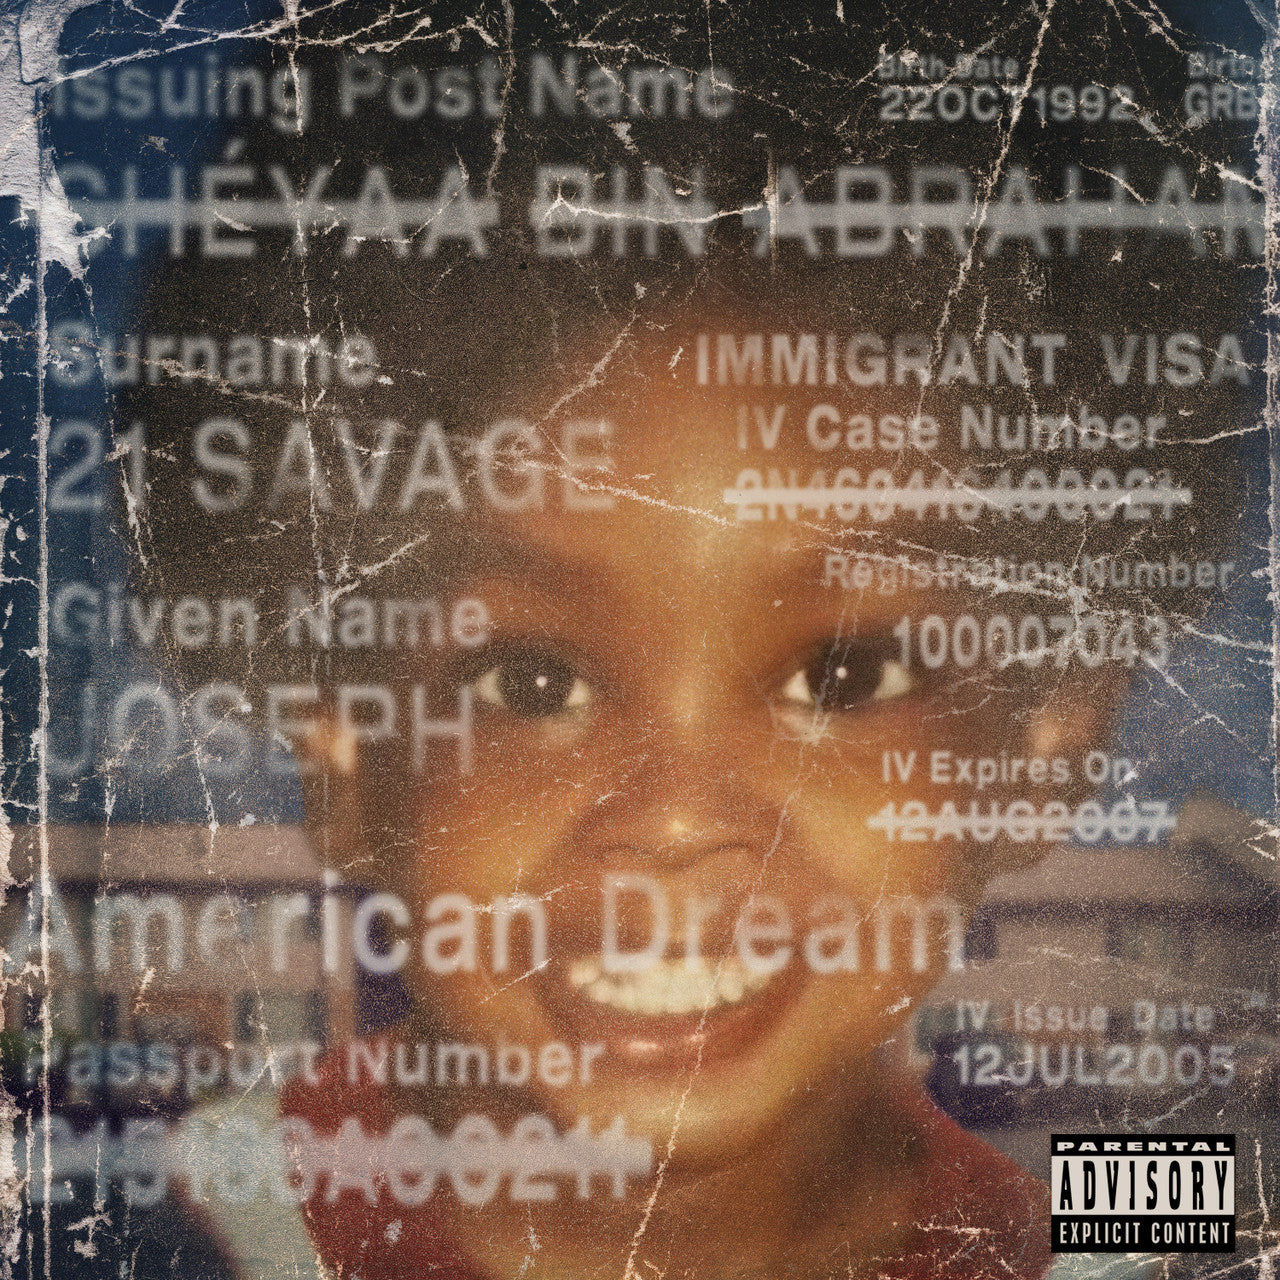 21 Savage "american dream" 2LP